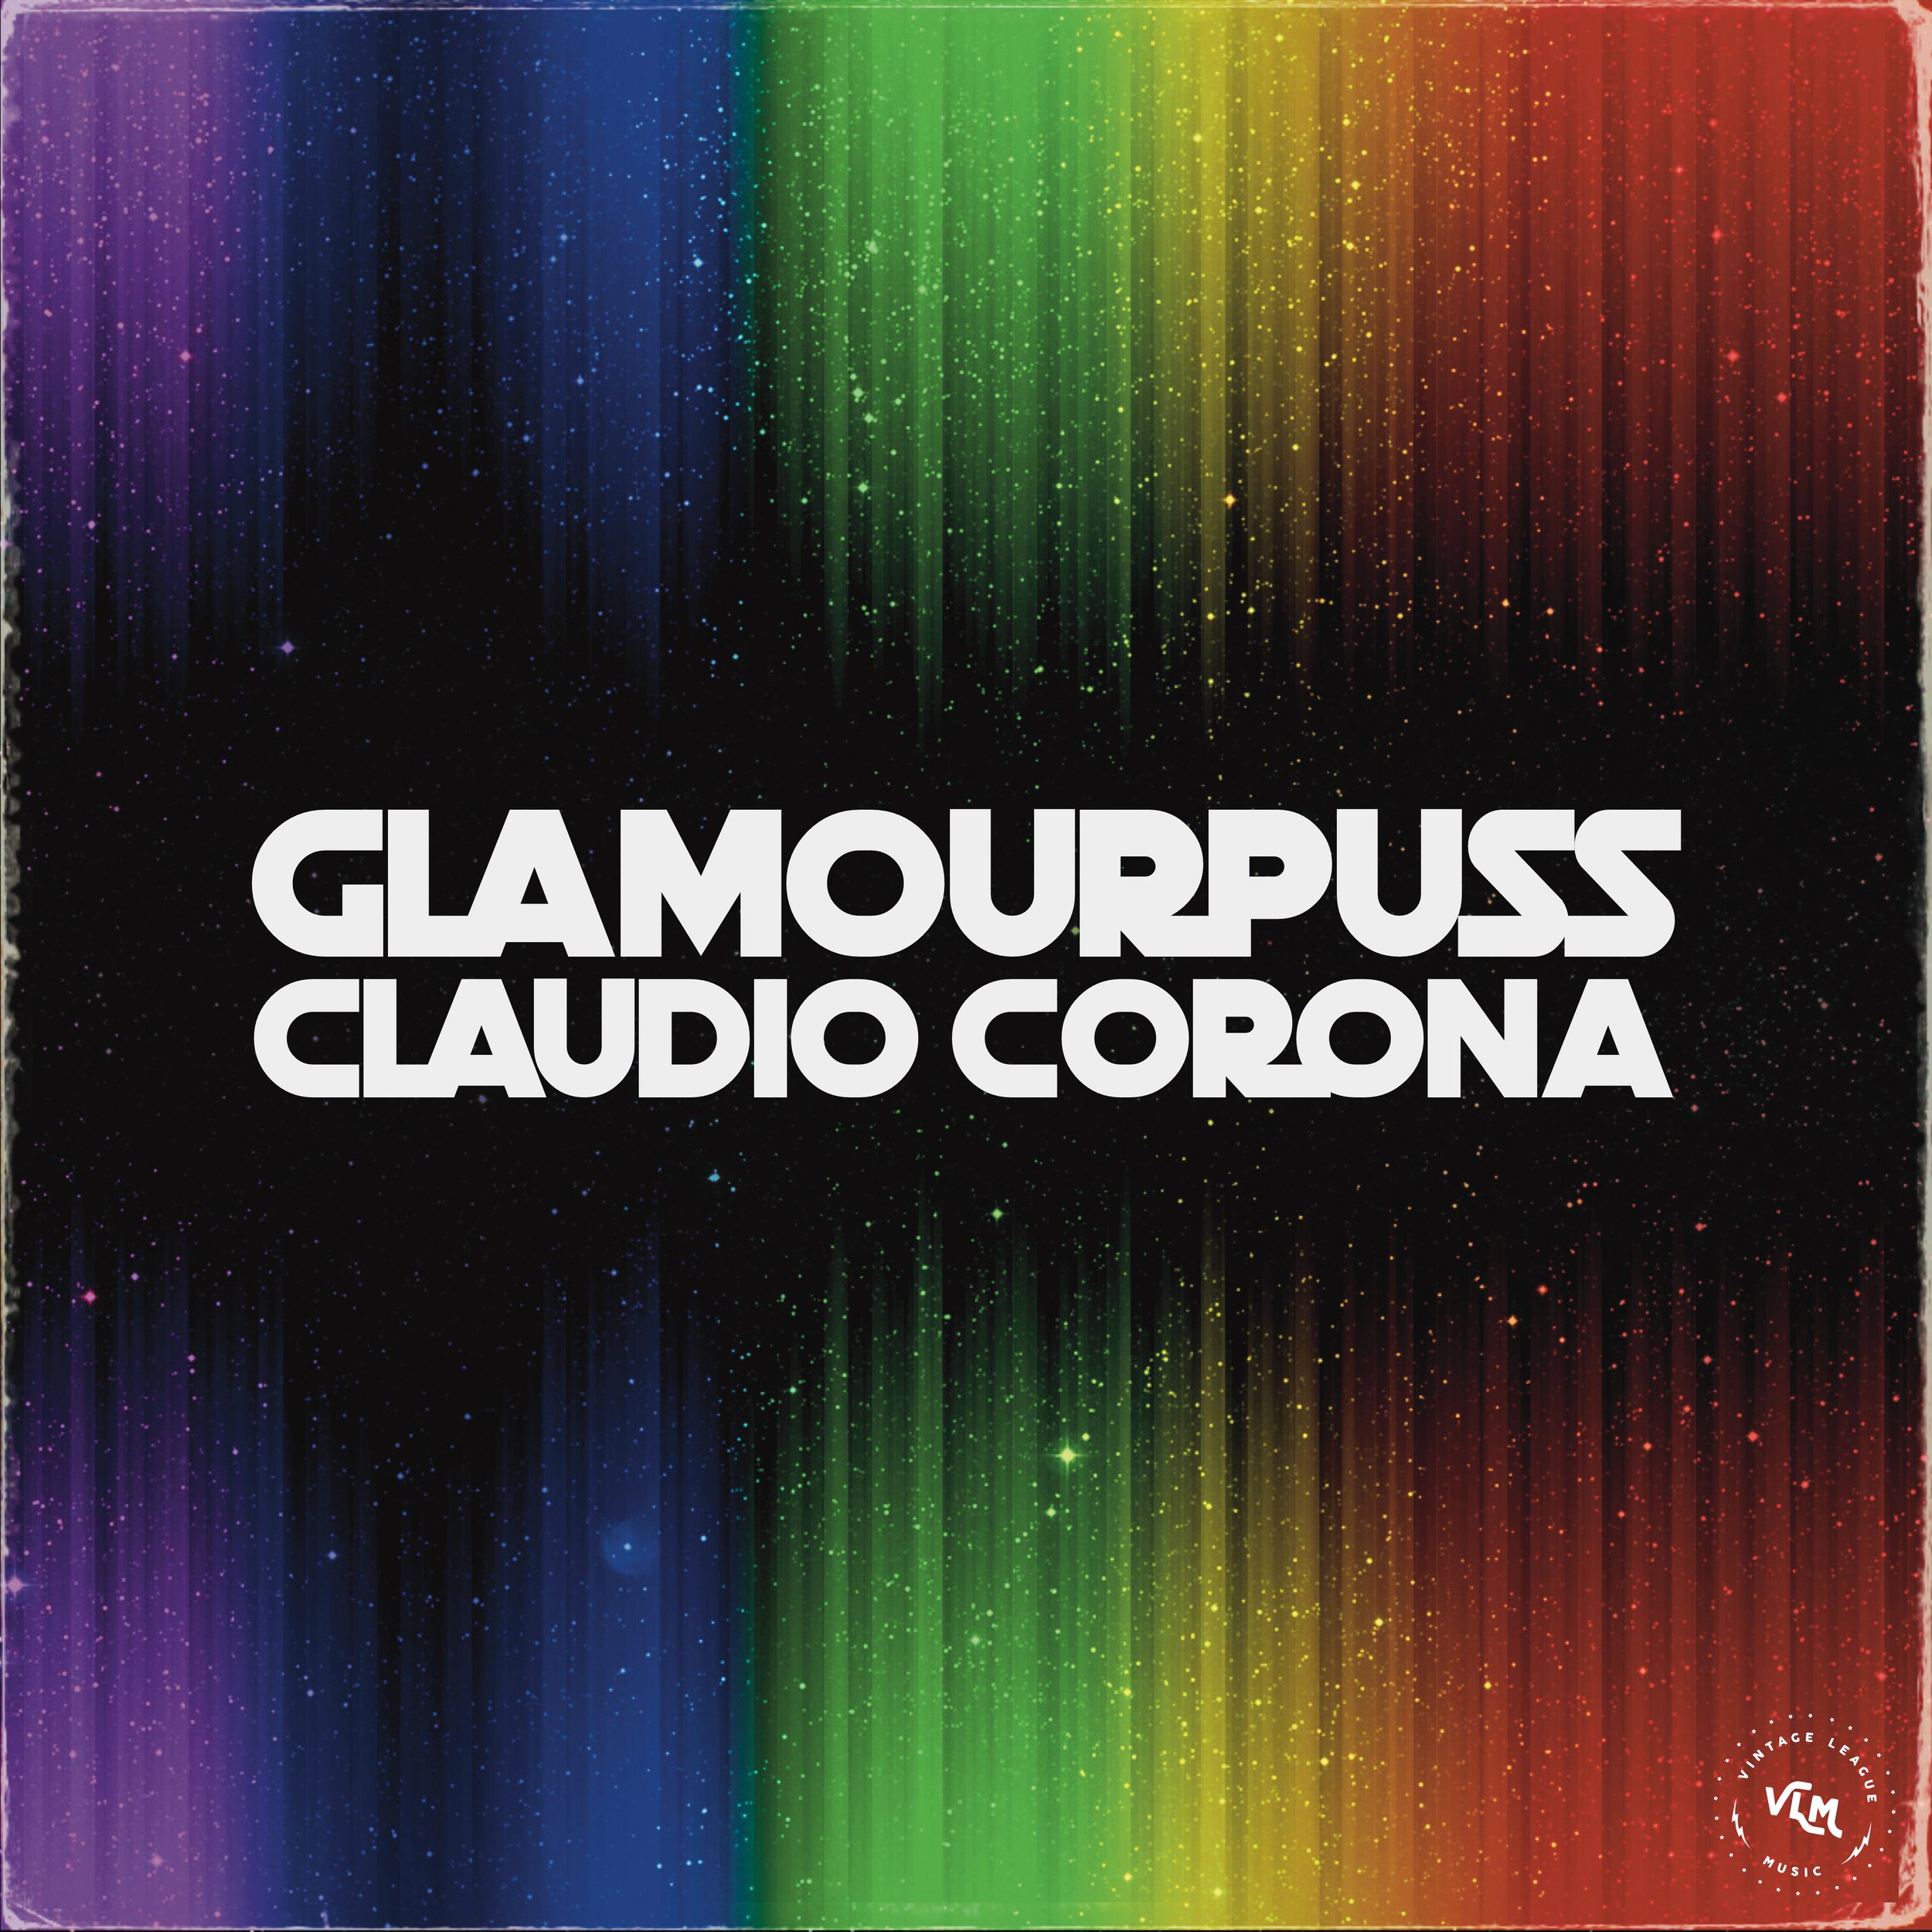 Glamourpuss - single.jpg